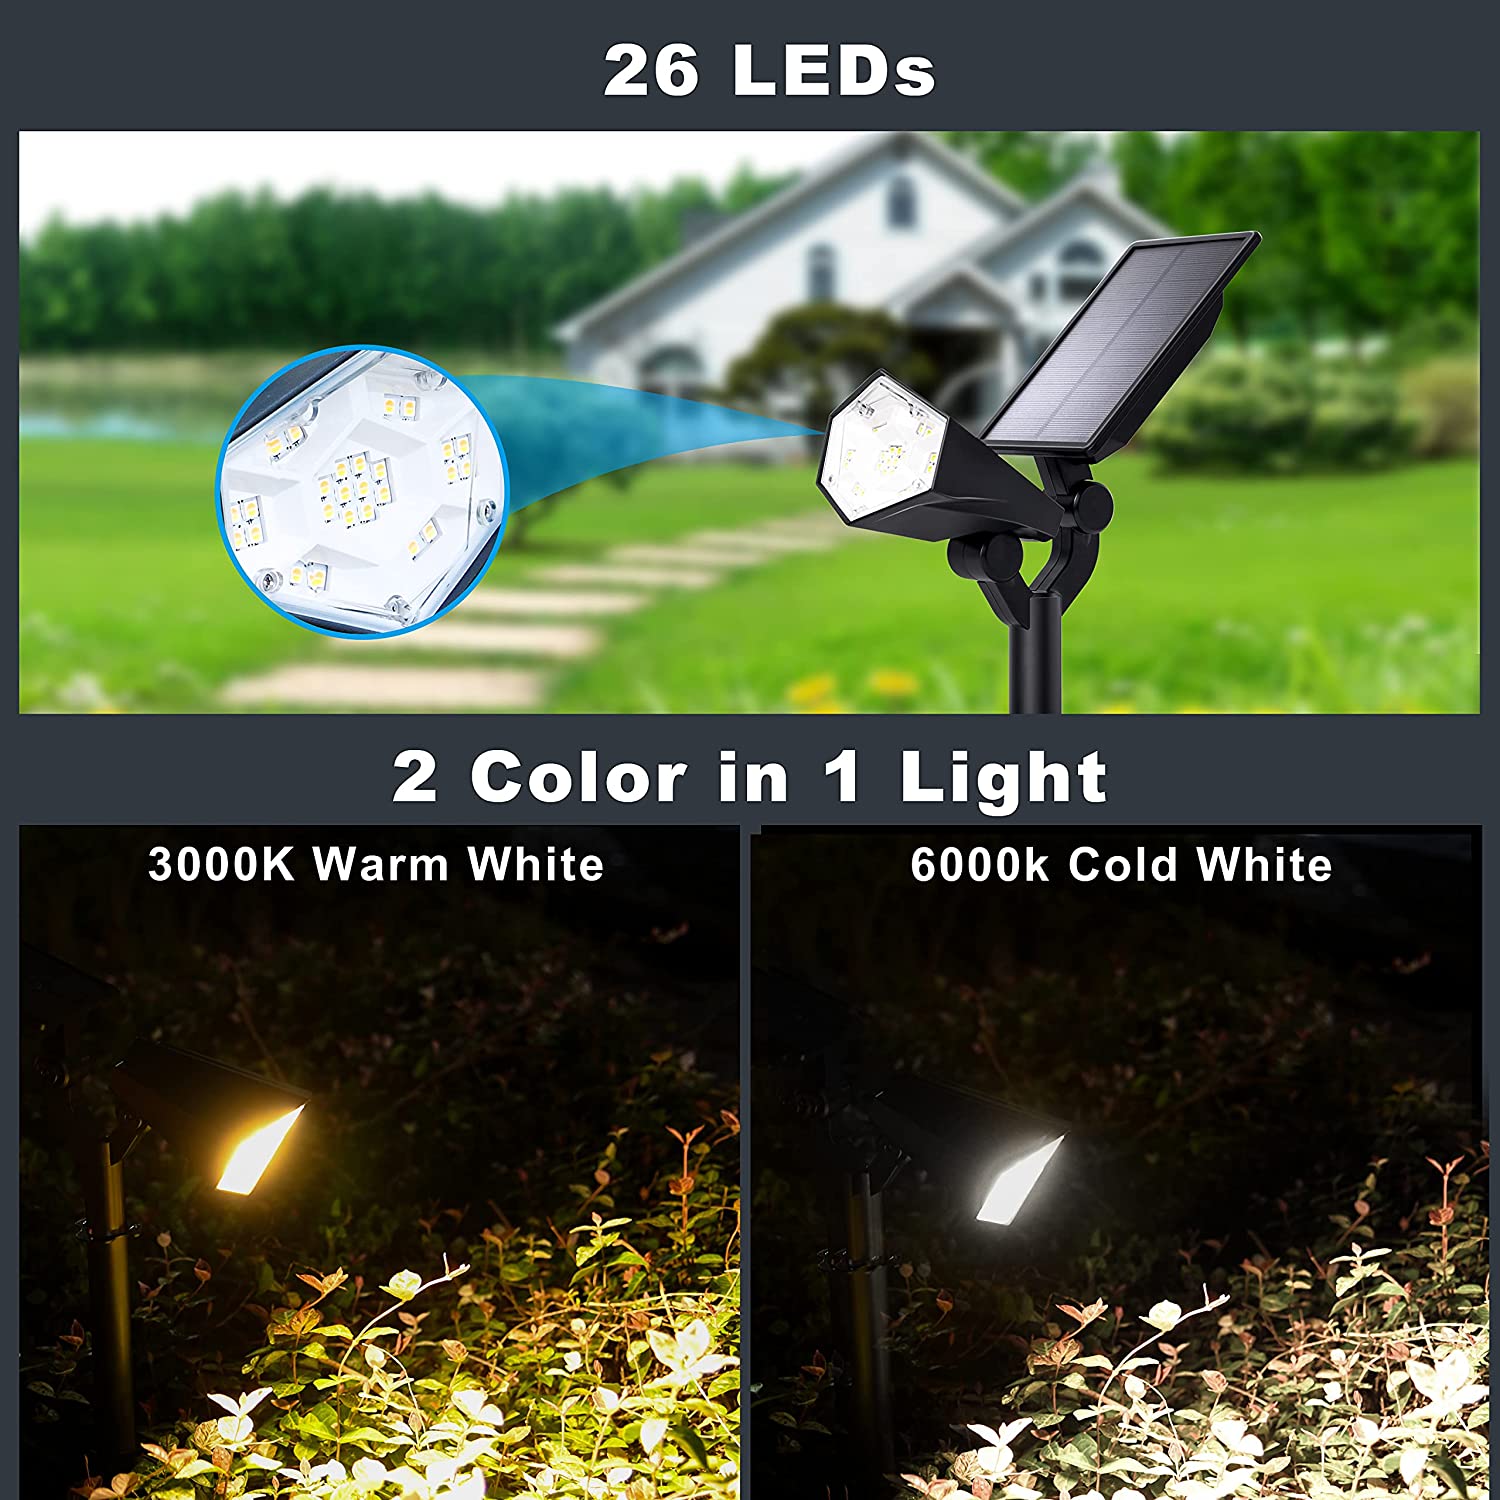 Waterproof Outdoor Garden Landscape Lighting 26 Led Solar Powered Lawn Pathway Lights